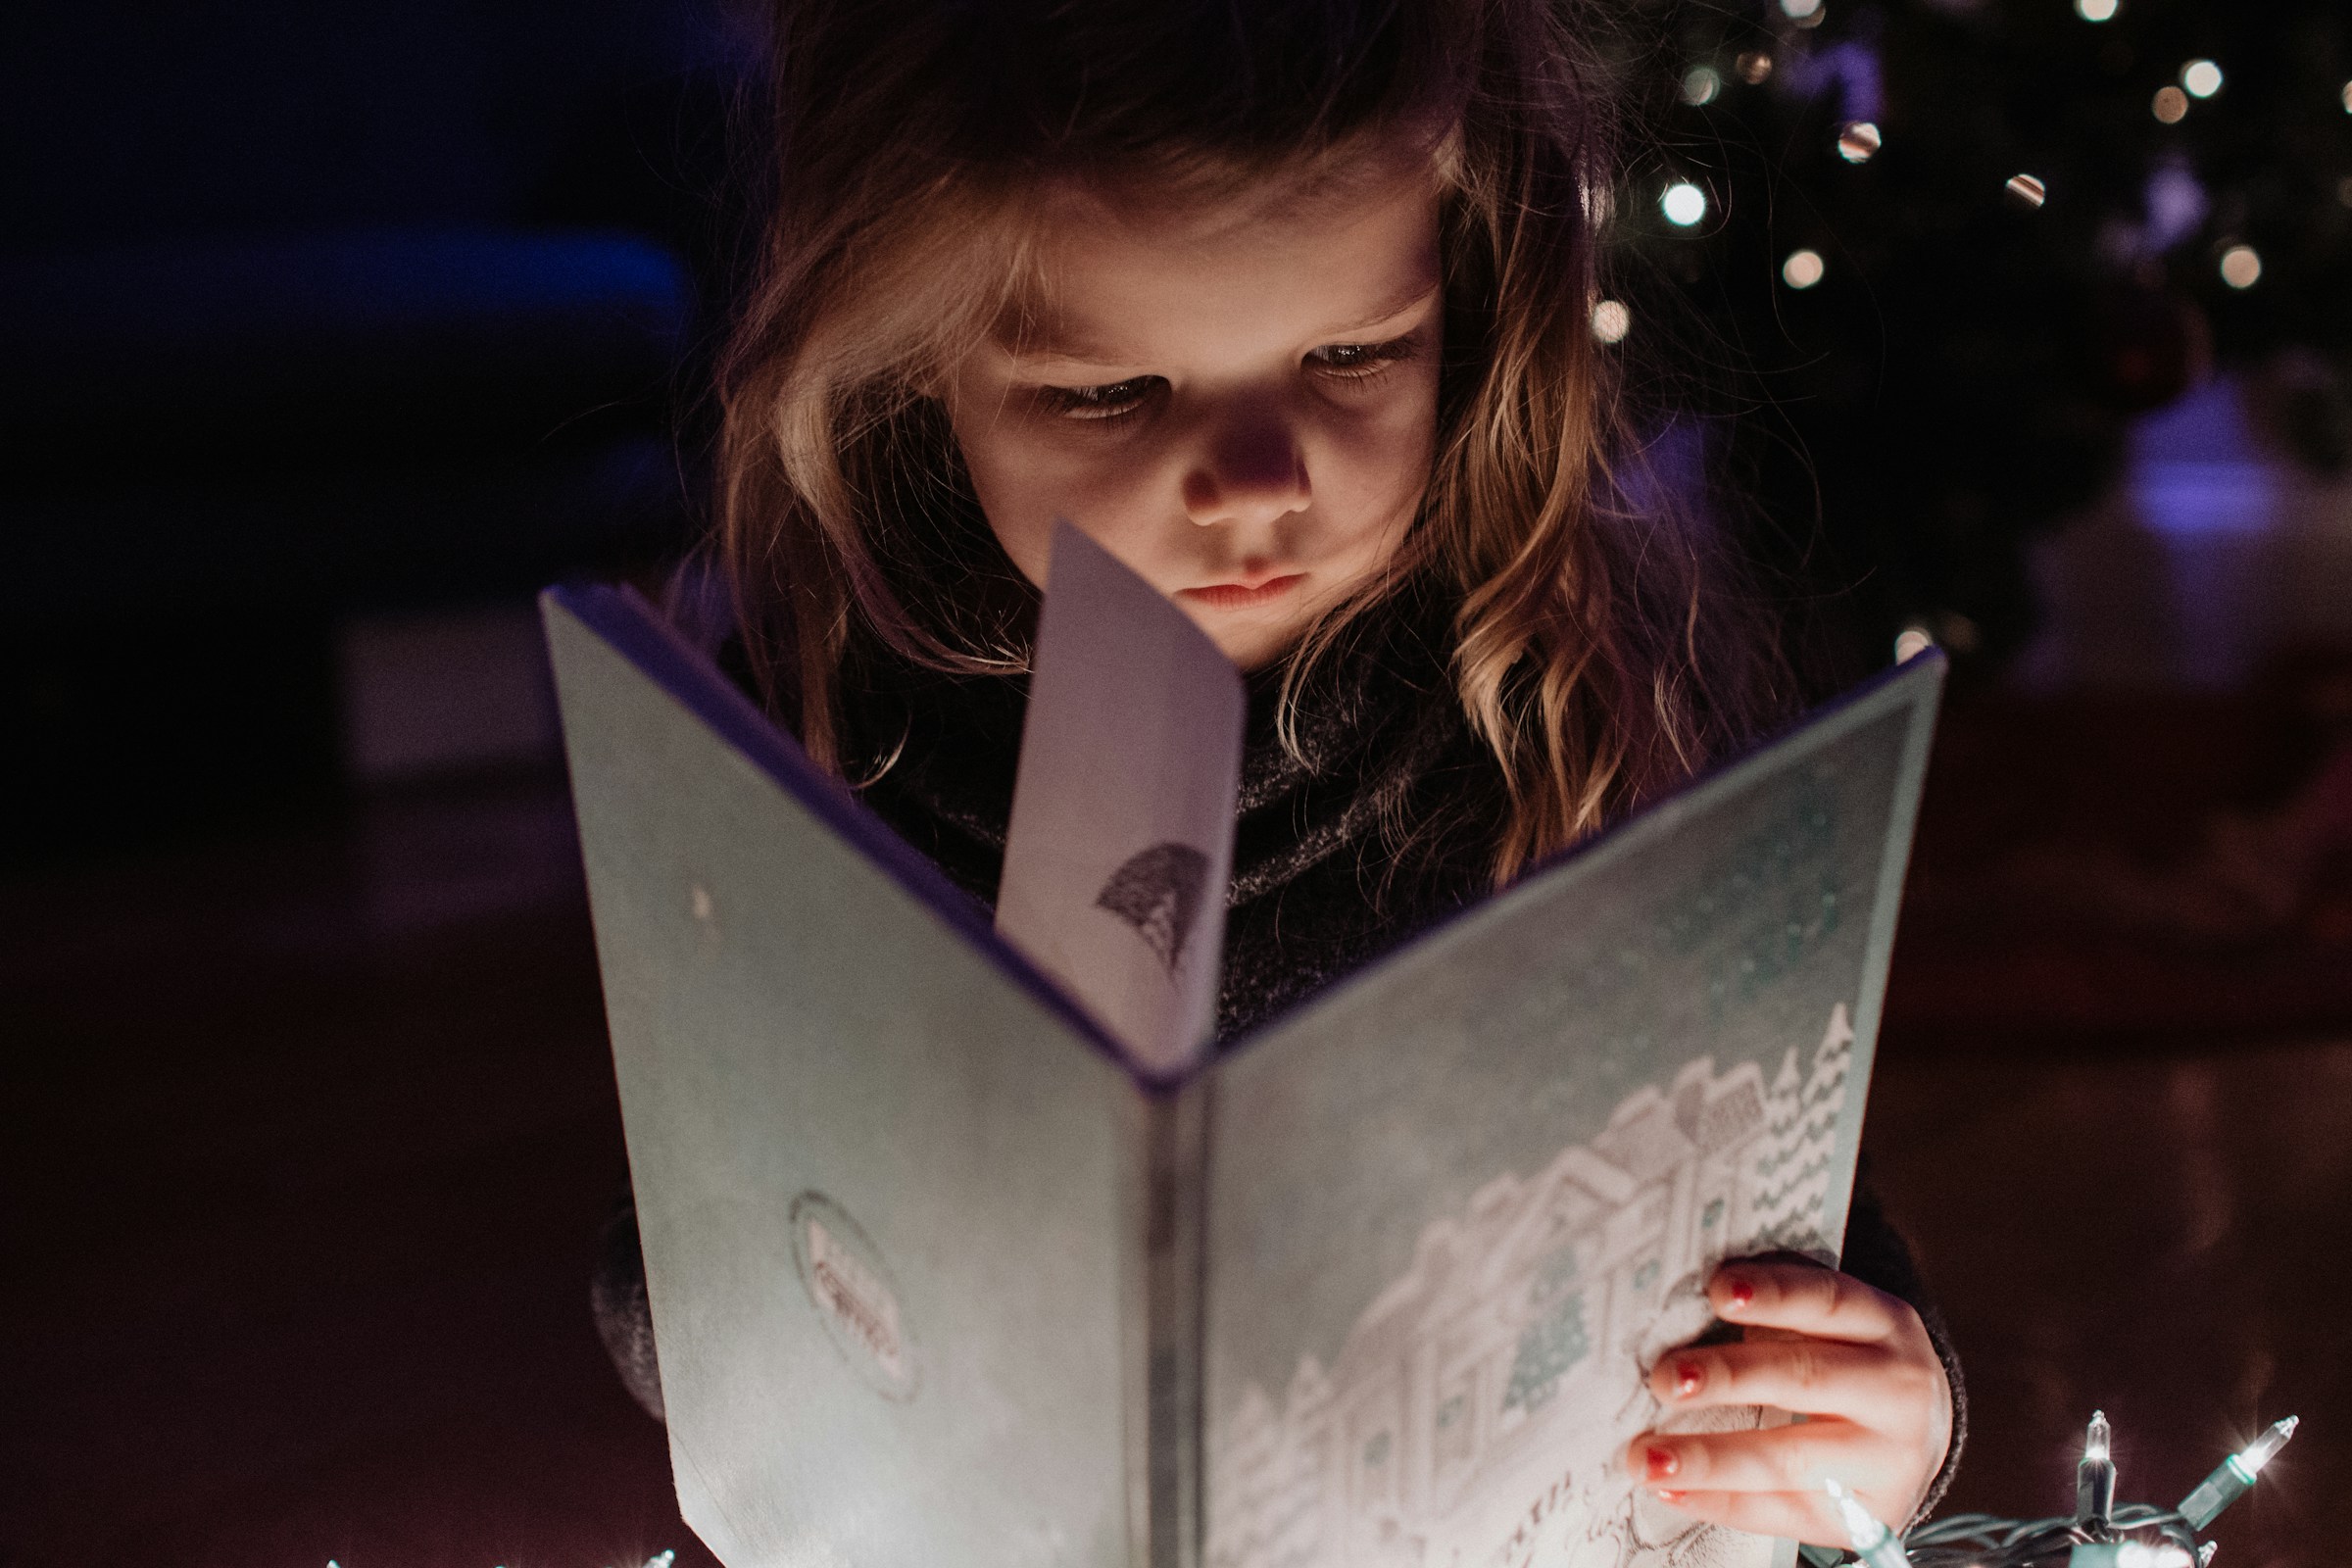 A little girl holding a book | Source: Unsplash